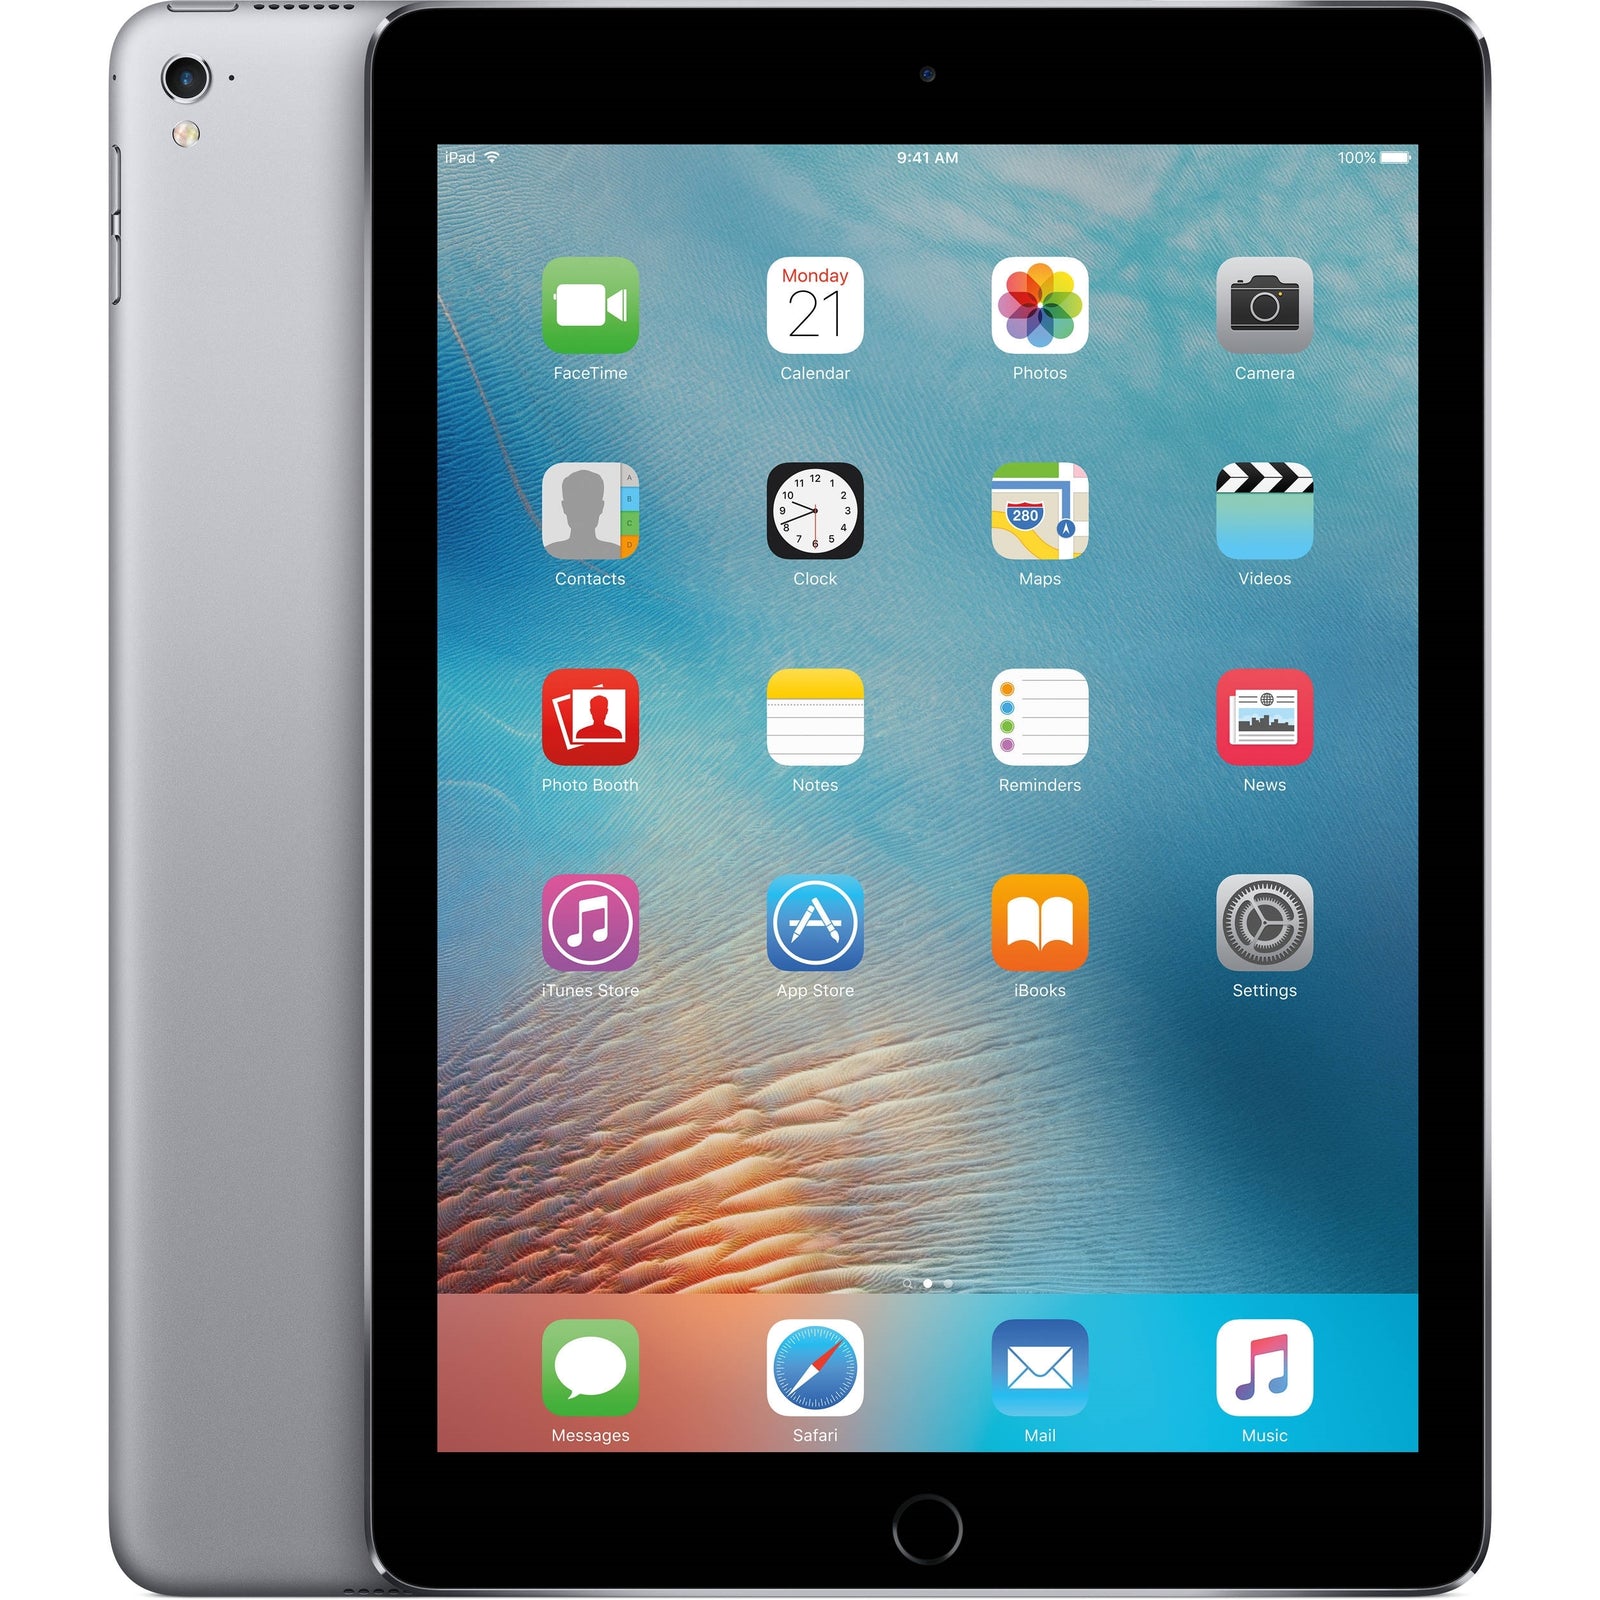 Apple iPad Pro MLMV2LL/A 9.7" Tablet 128GB WiFi + 4G LTE, Black/Space